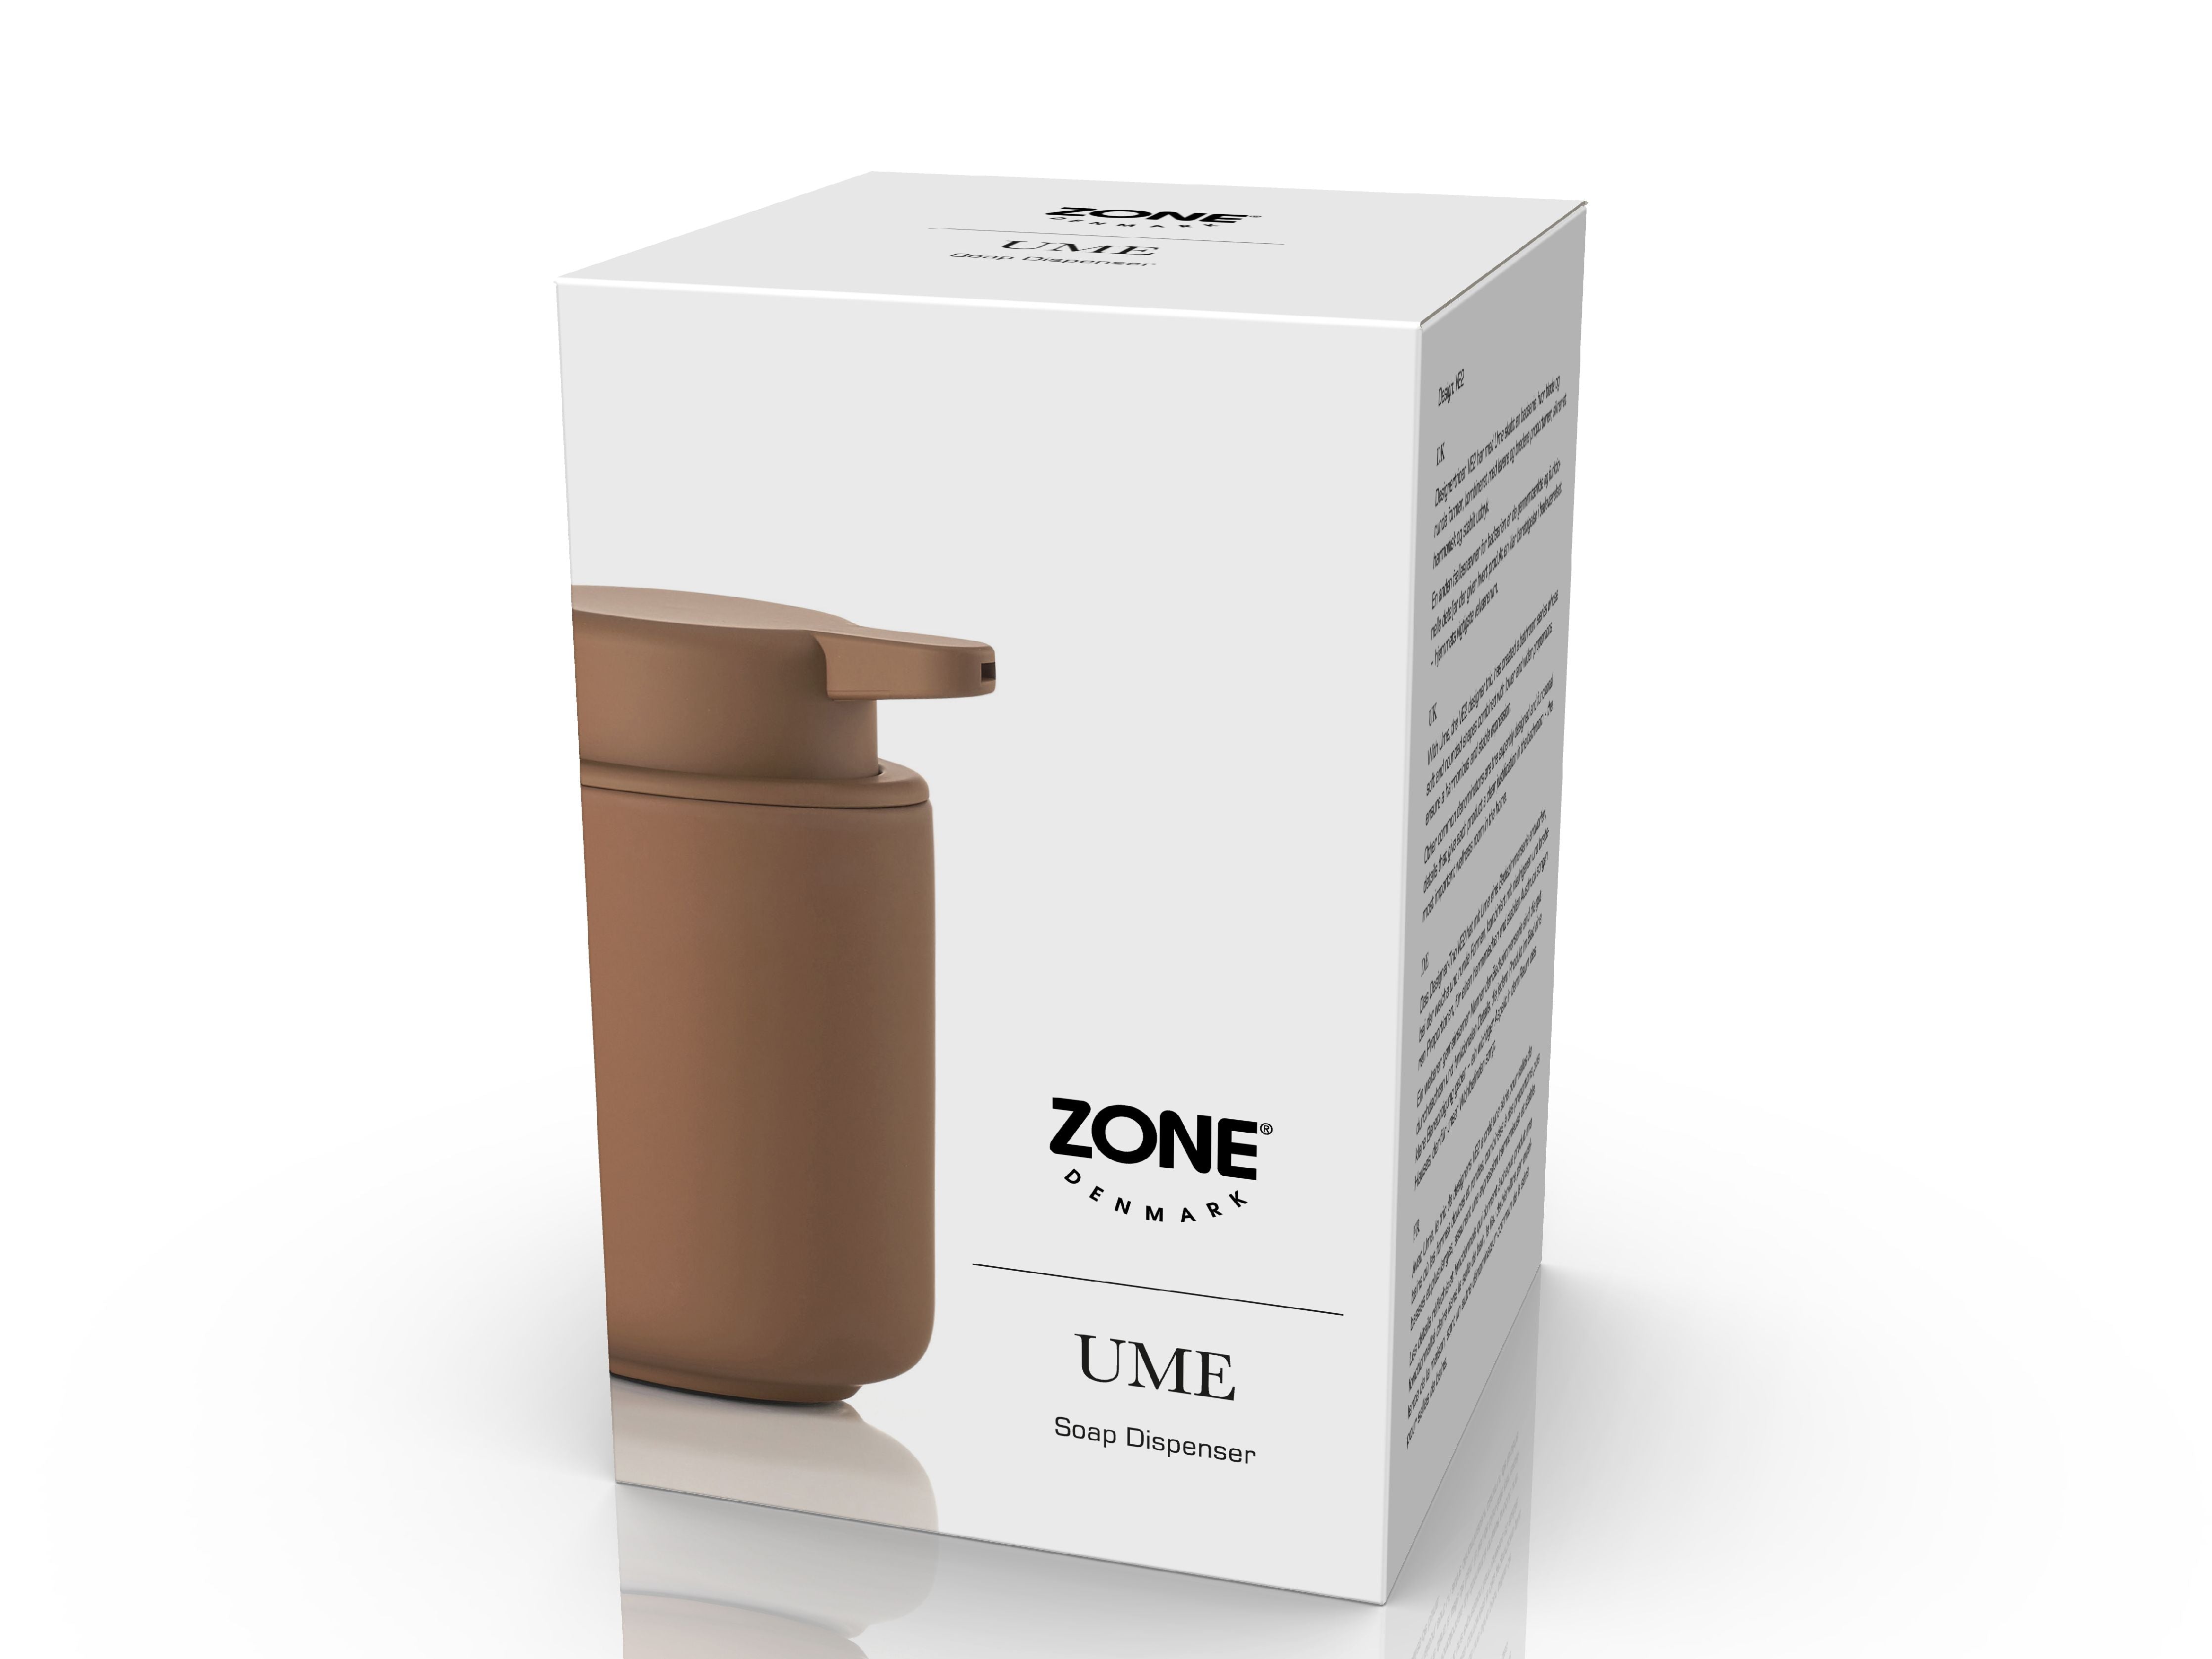 Zona Dinamarca UME SOAP dispenser 0.25 litros, terracota